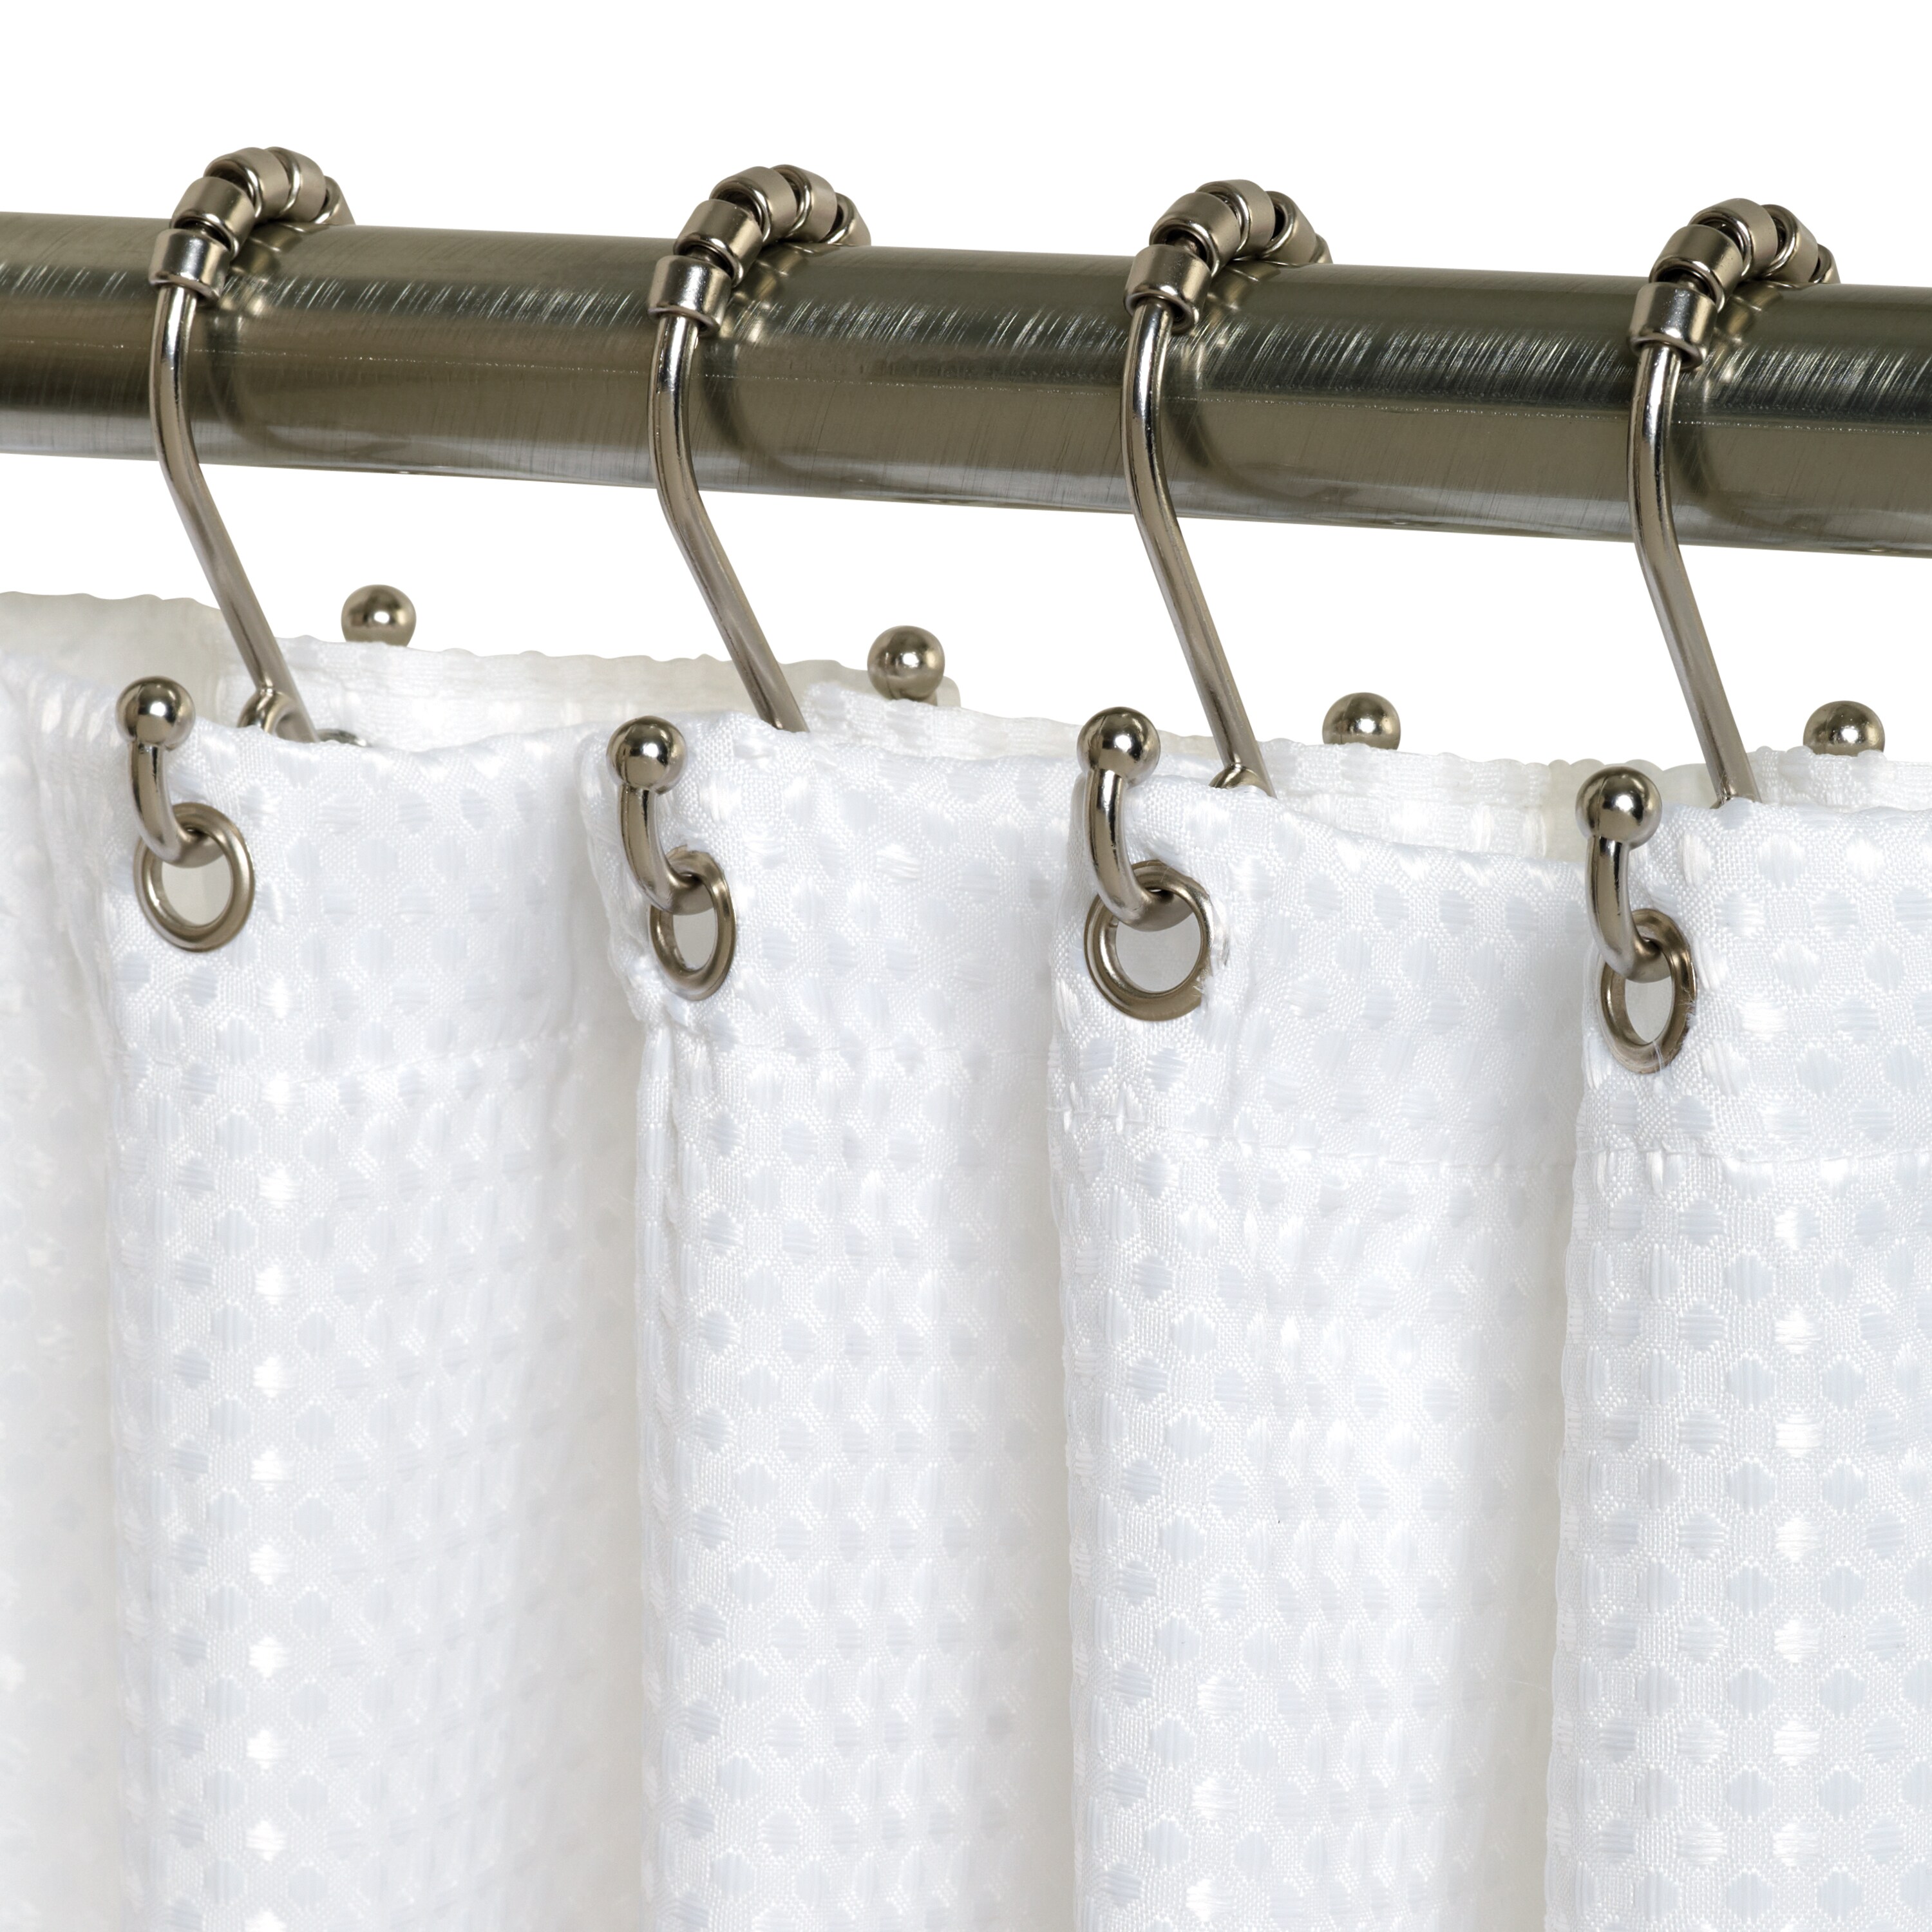 Brushed Nickel Double Hook Shower Curtain Rings Rust Resistant, 12 Pack 